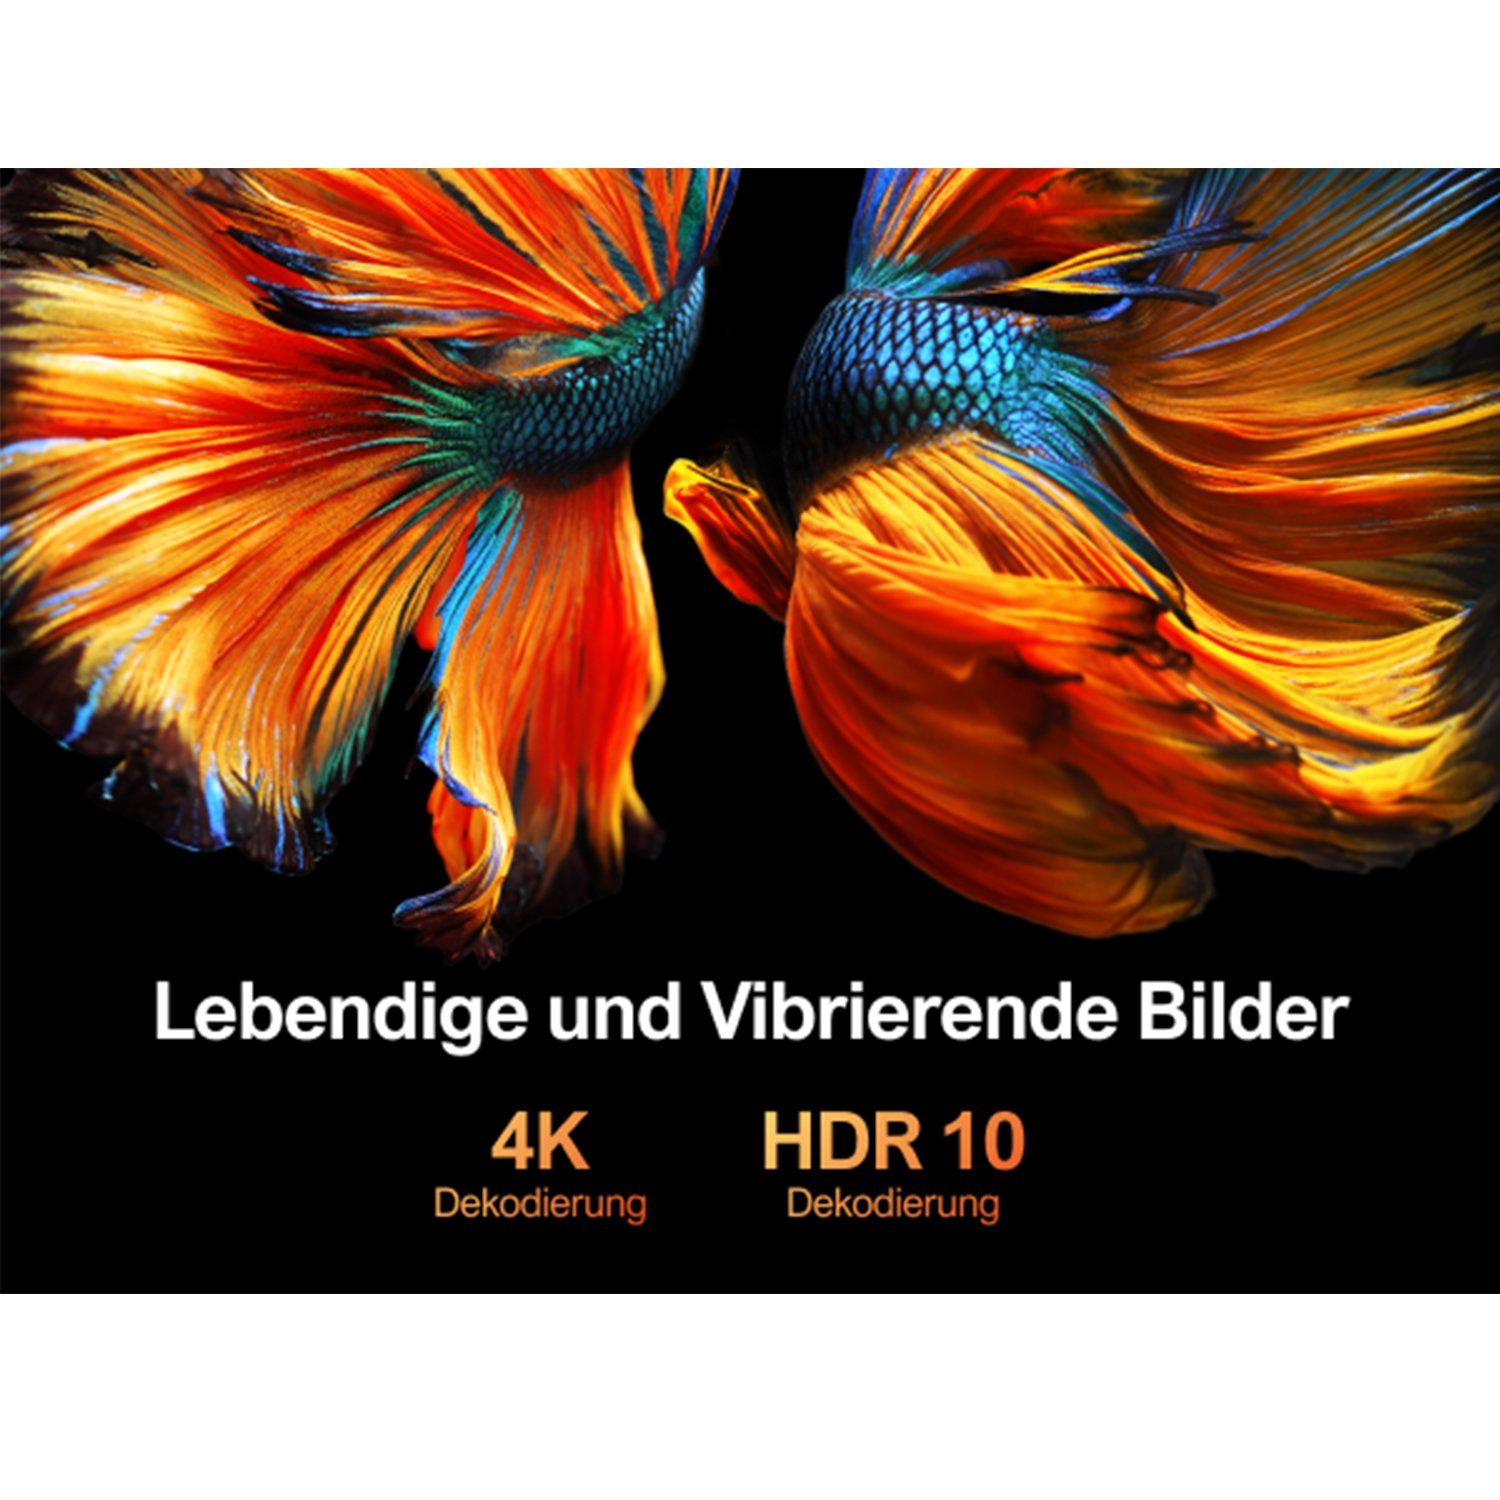 Ultimea Native 1080P Full Autofokus&6D-Autotrapezkorrektur) 15000:1, Beamer px, 1080 HD HD,4K-Decodierung&HDR10, (21000 Full x 1920 grau lm